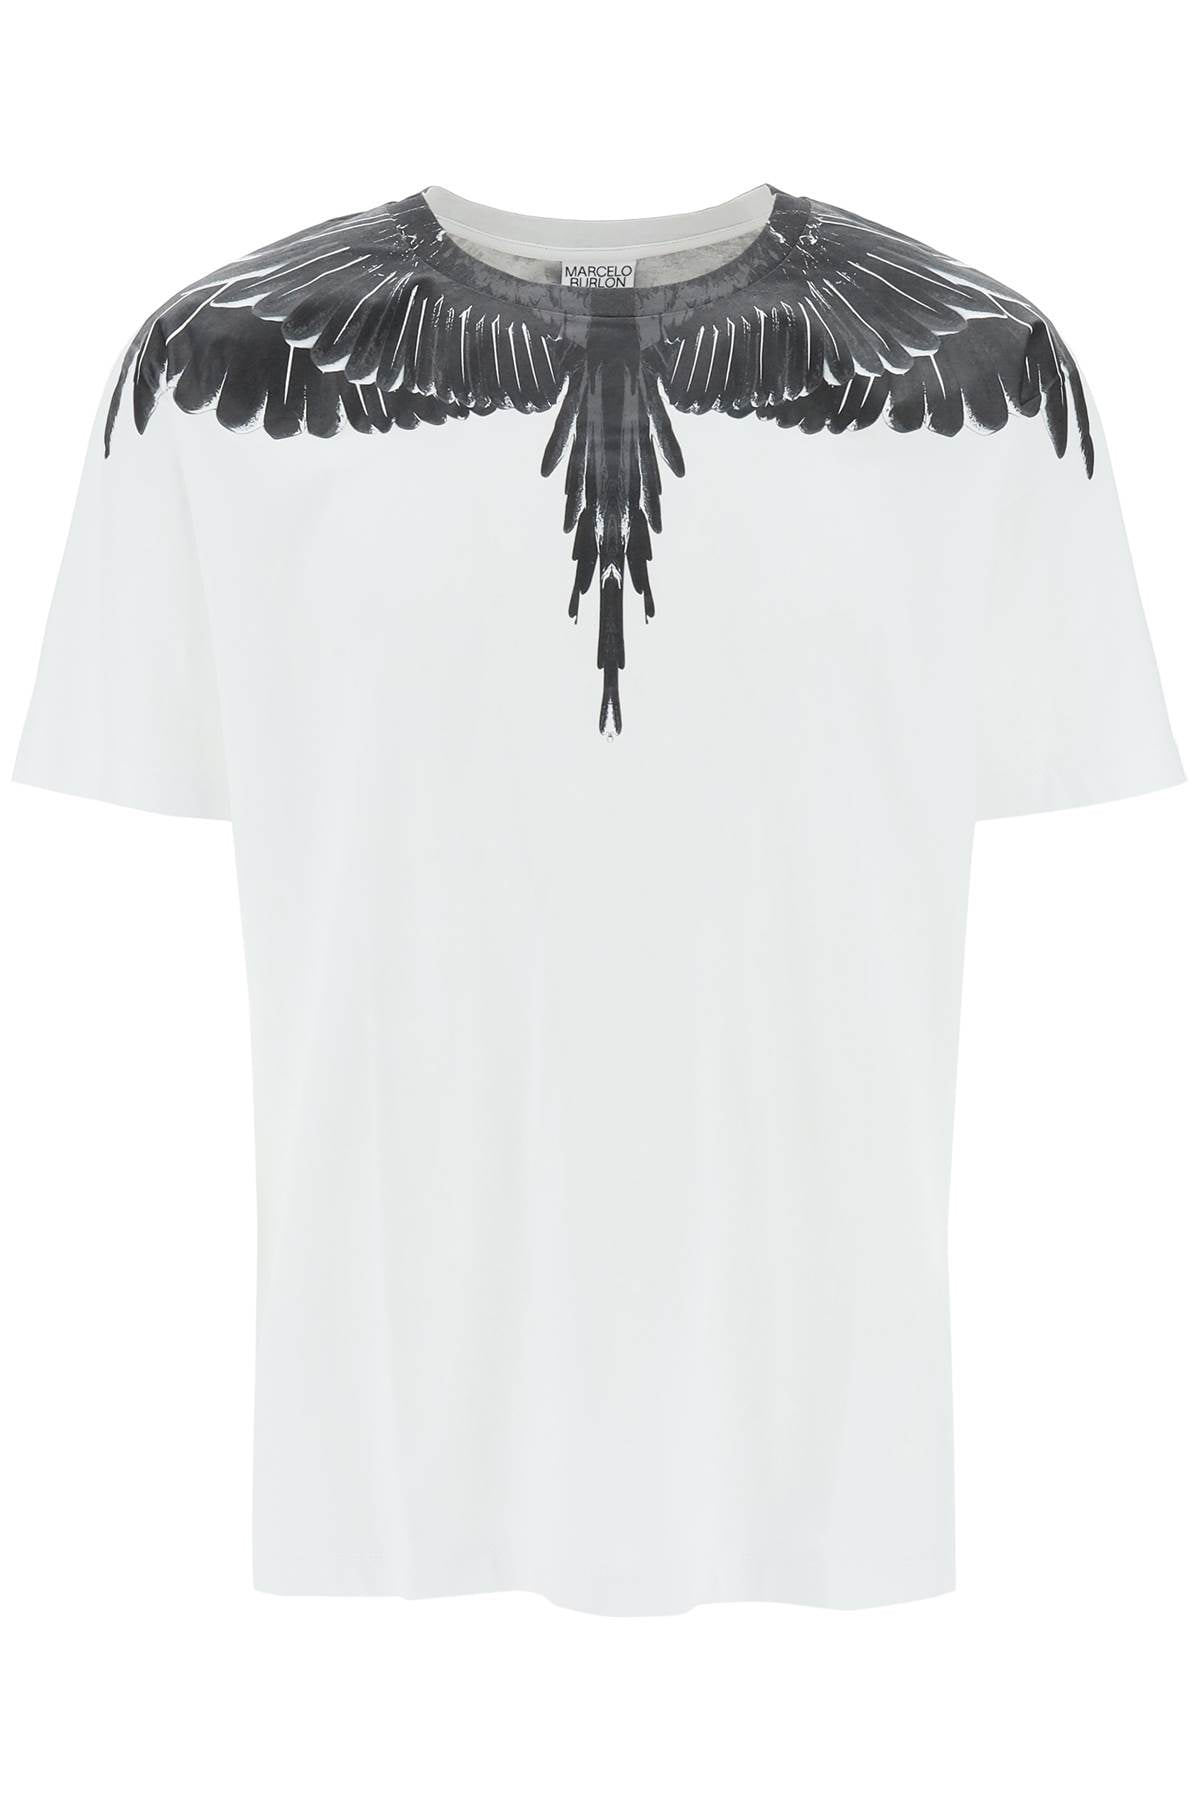 Marcelo Burlon Black Organic Cotton T-Shirt - XS